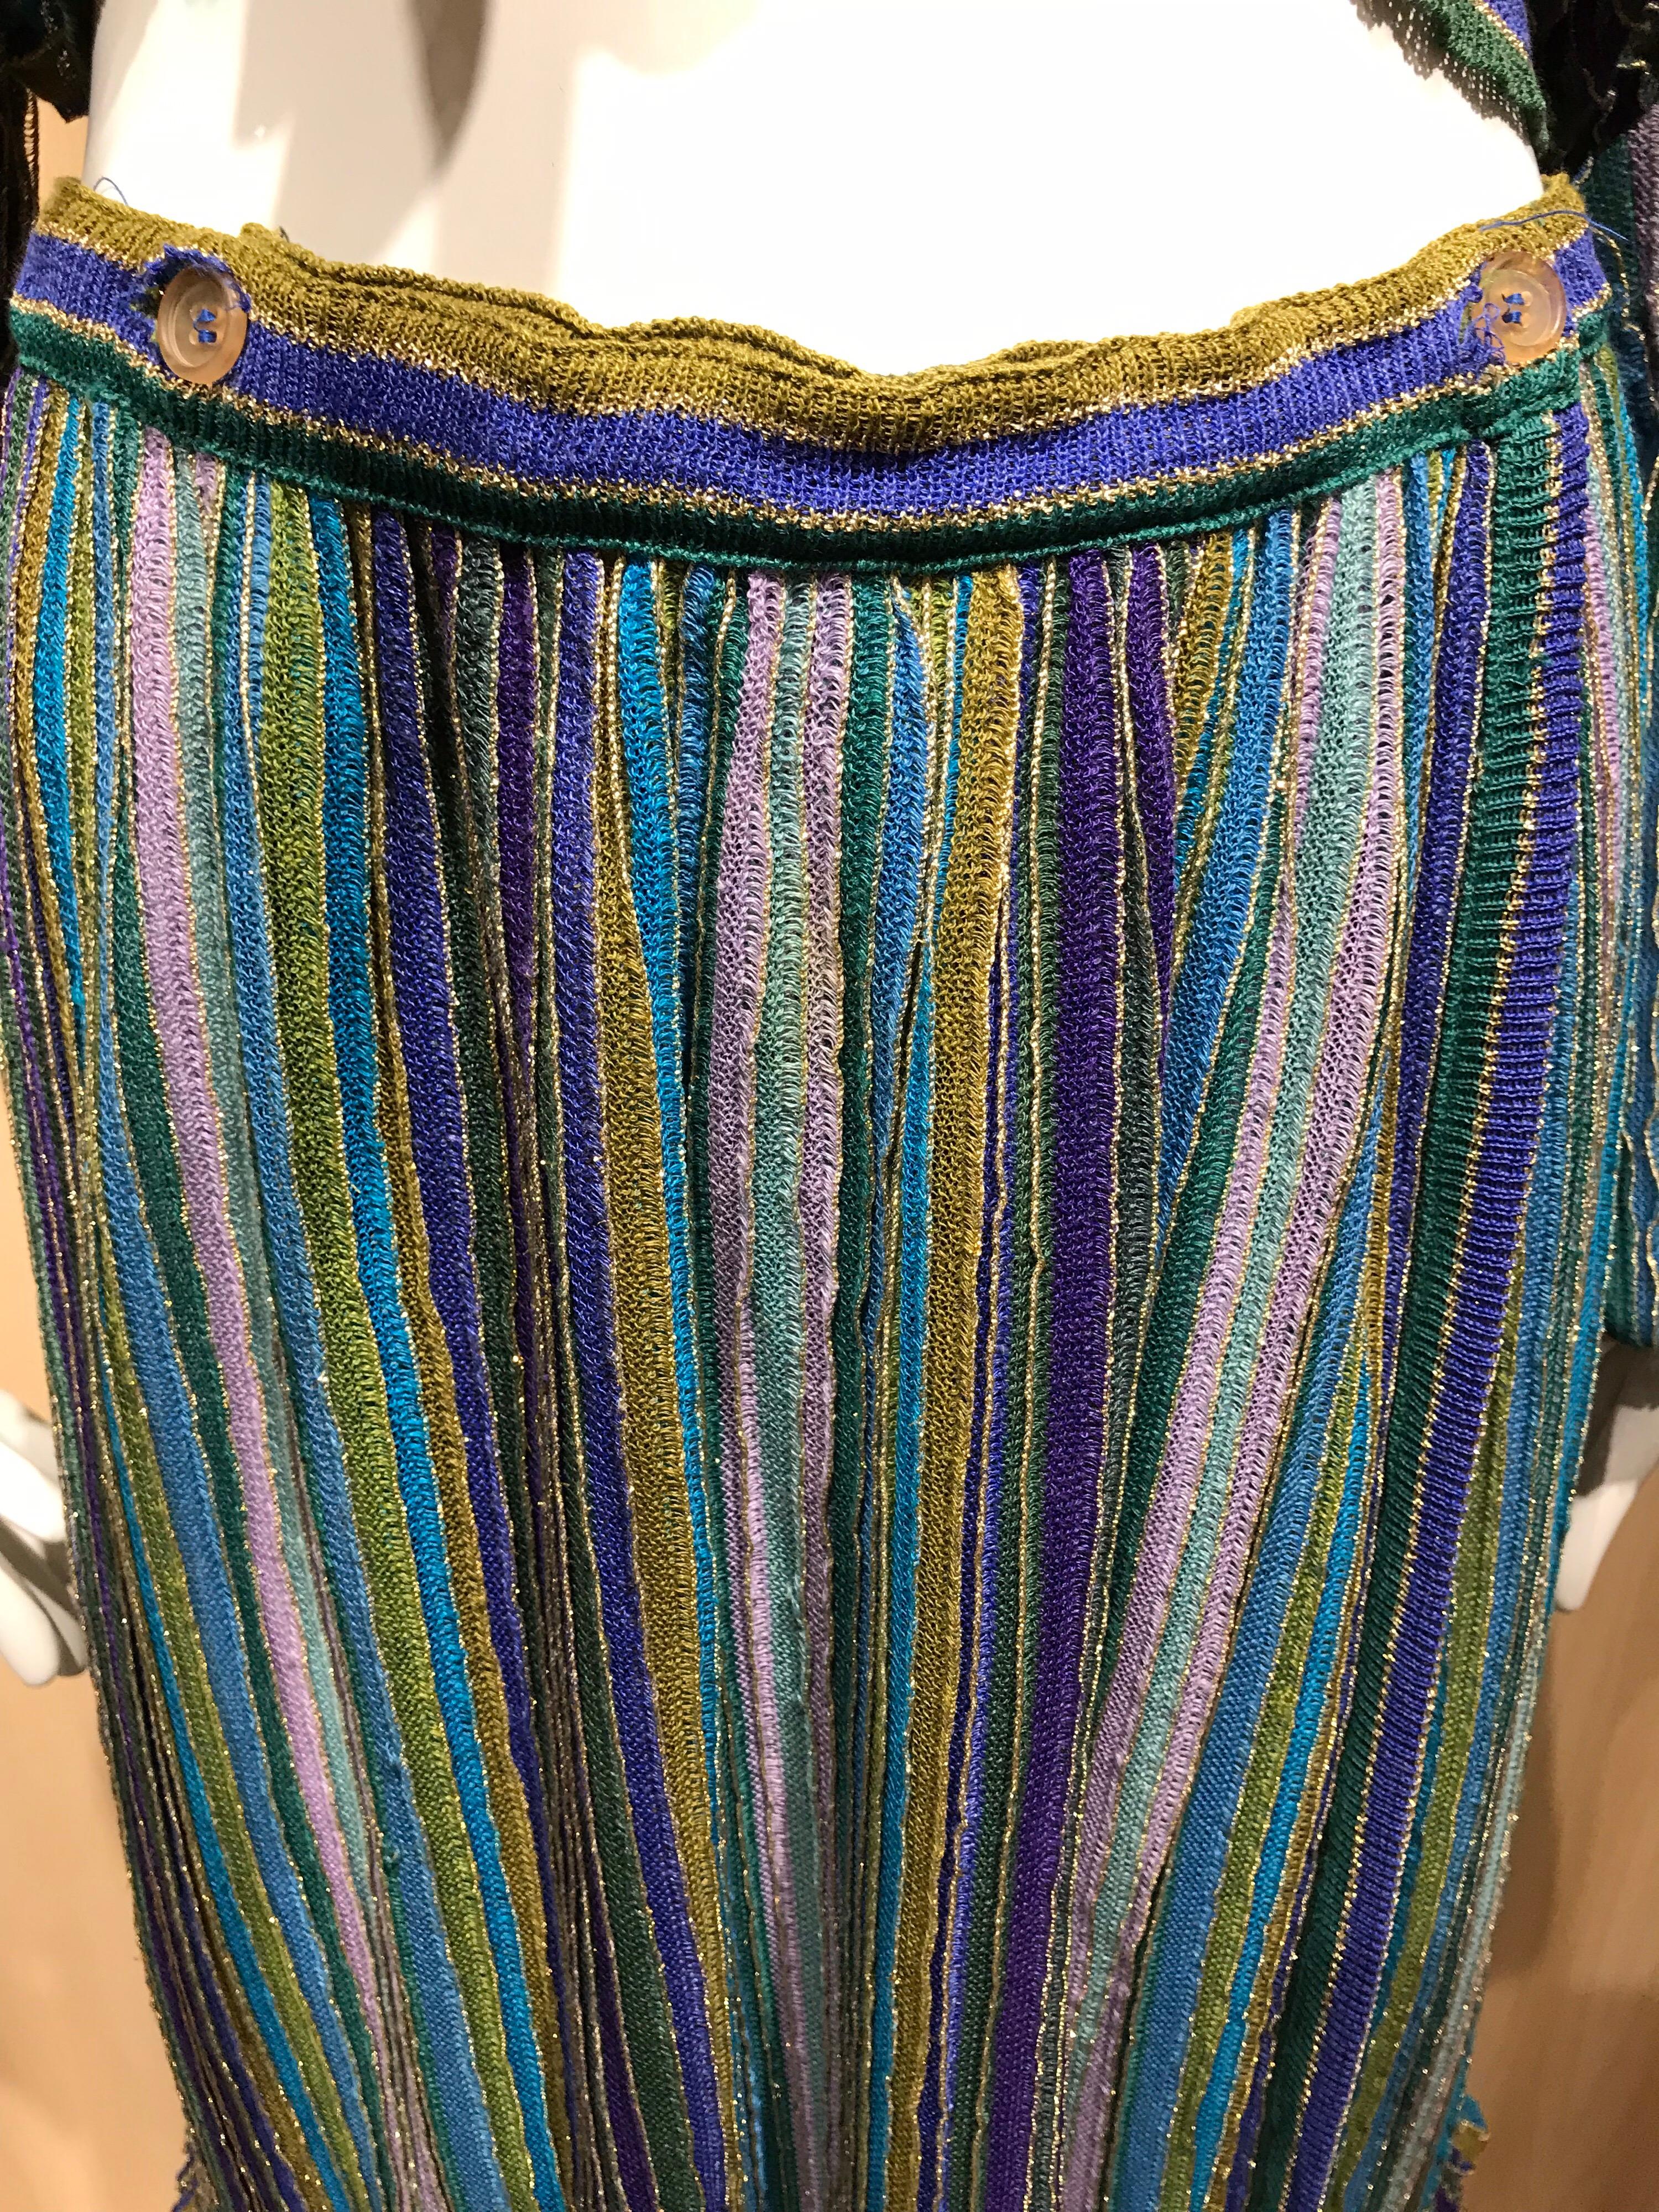 teal metallic skirt